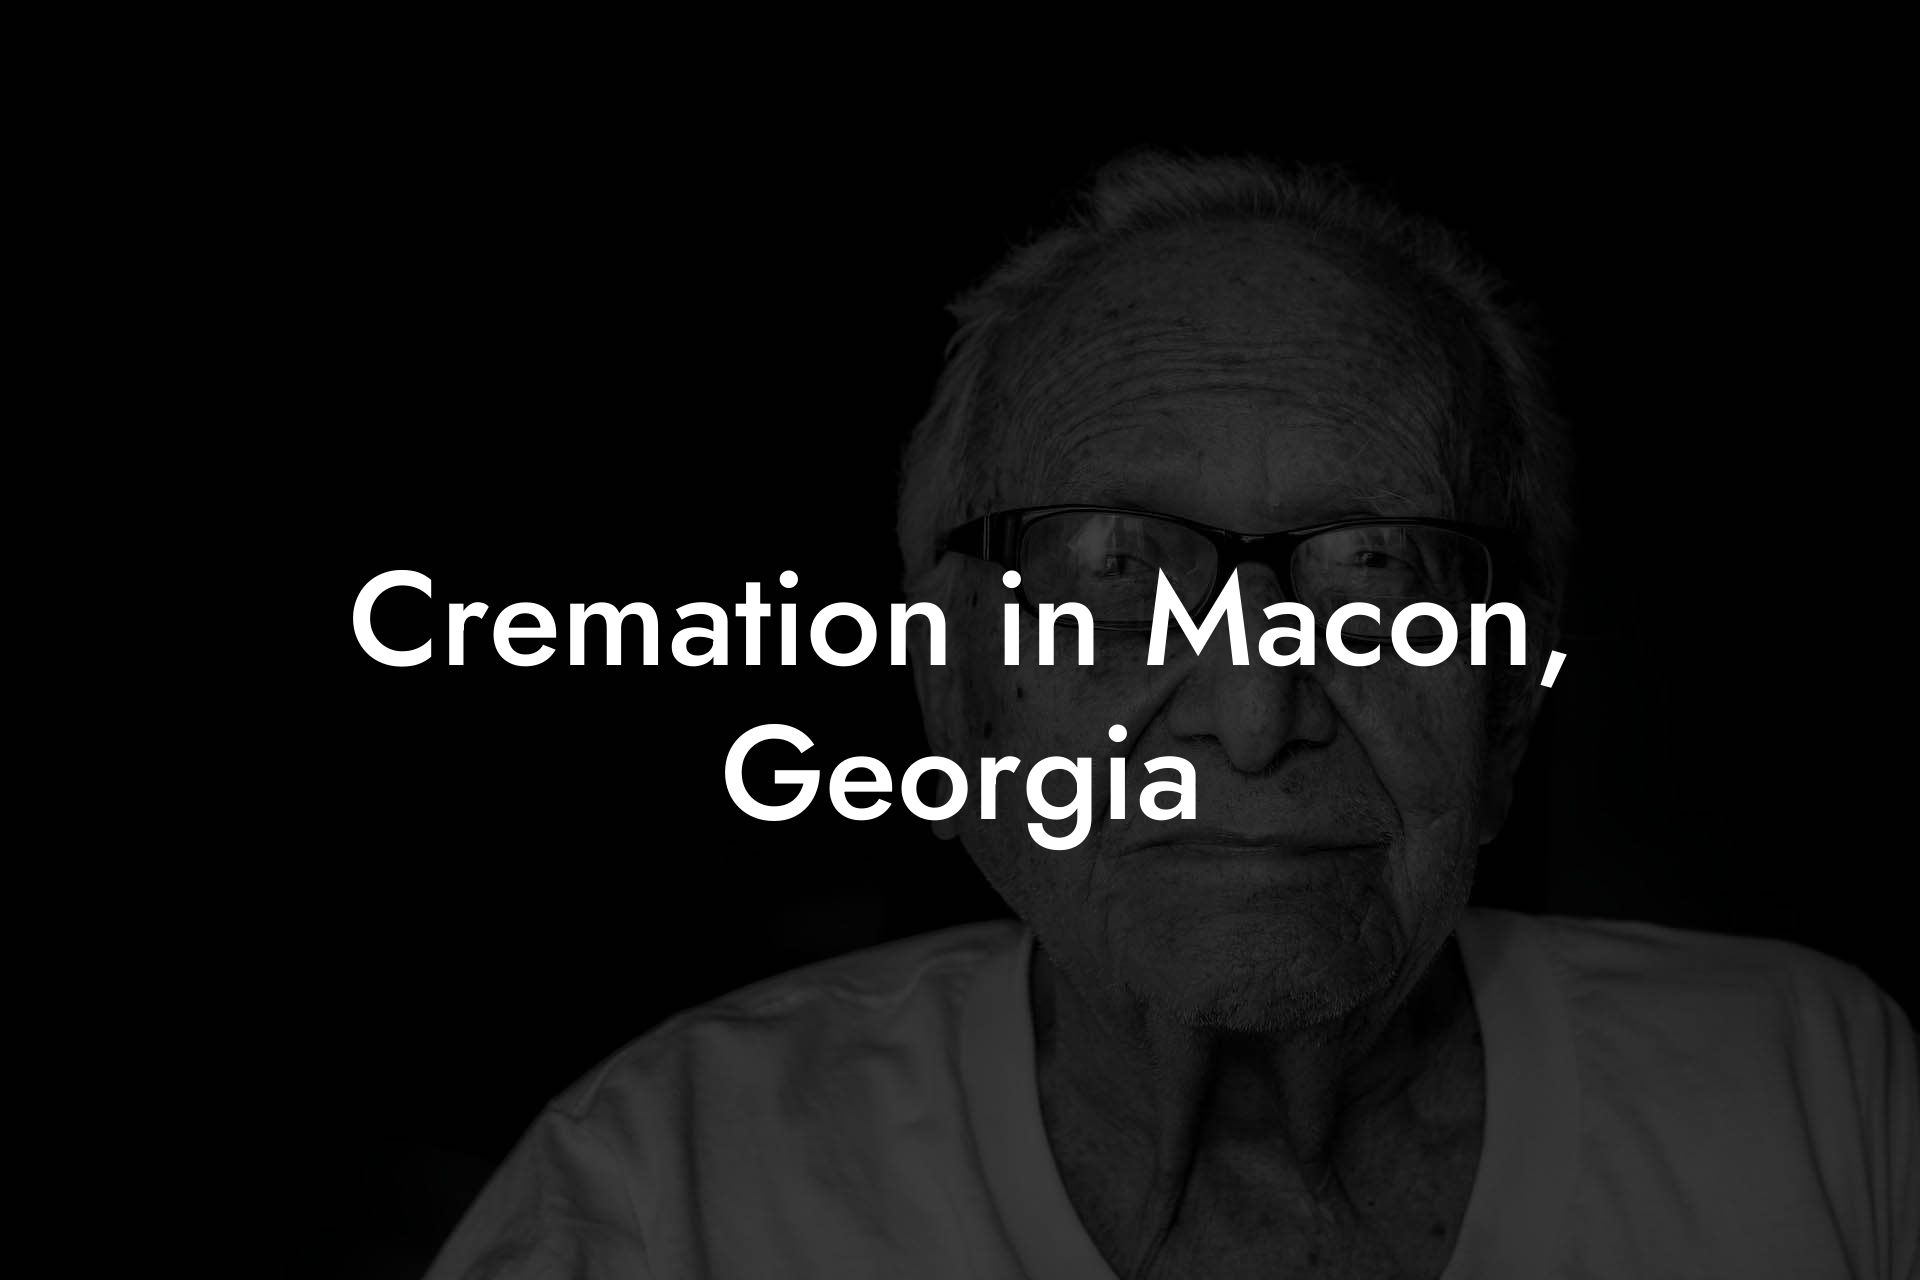 Cremation in Macon, Georgia